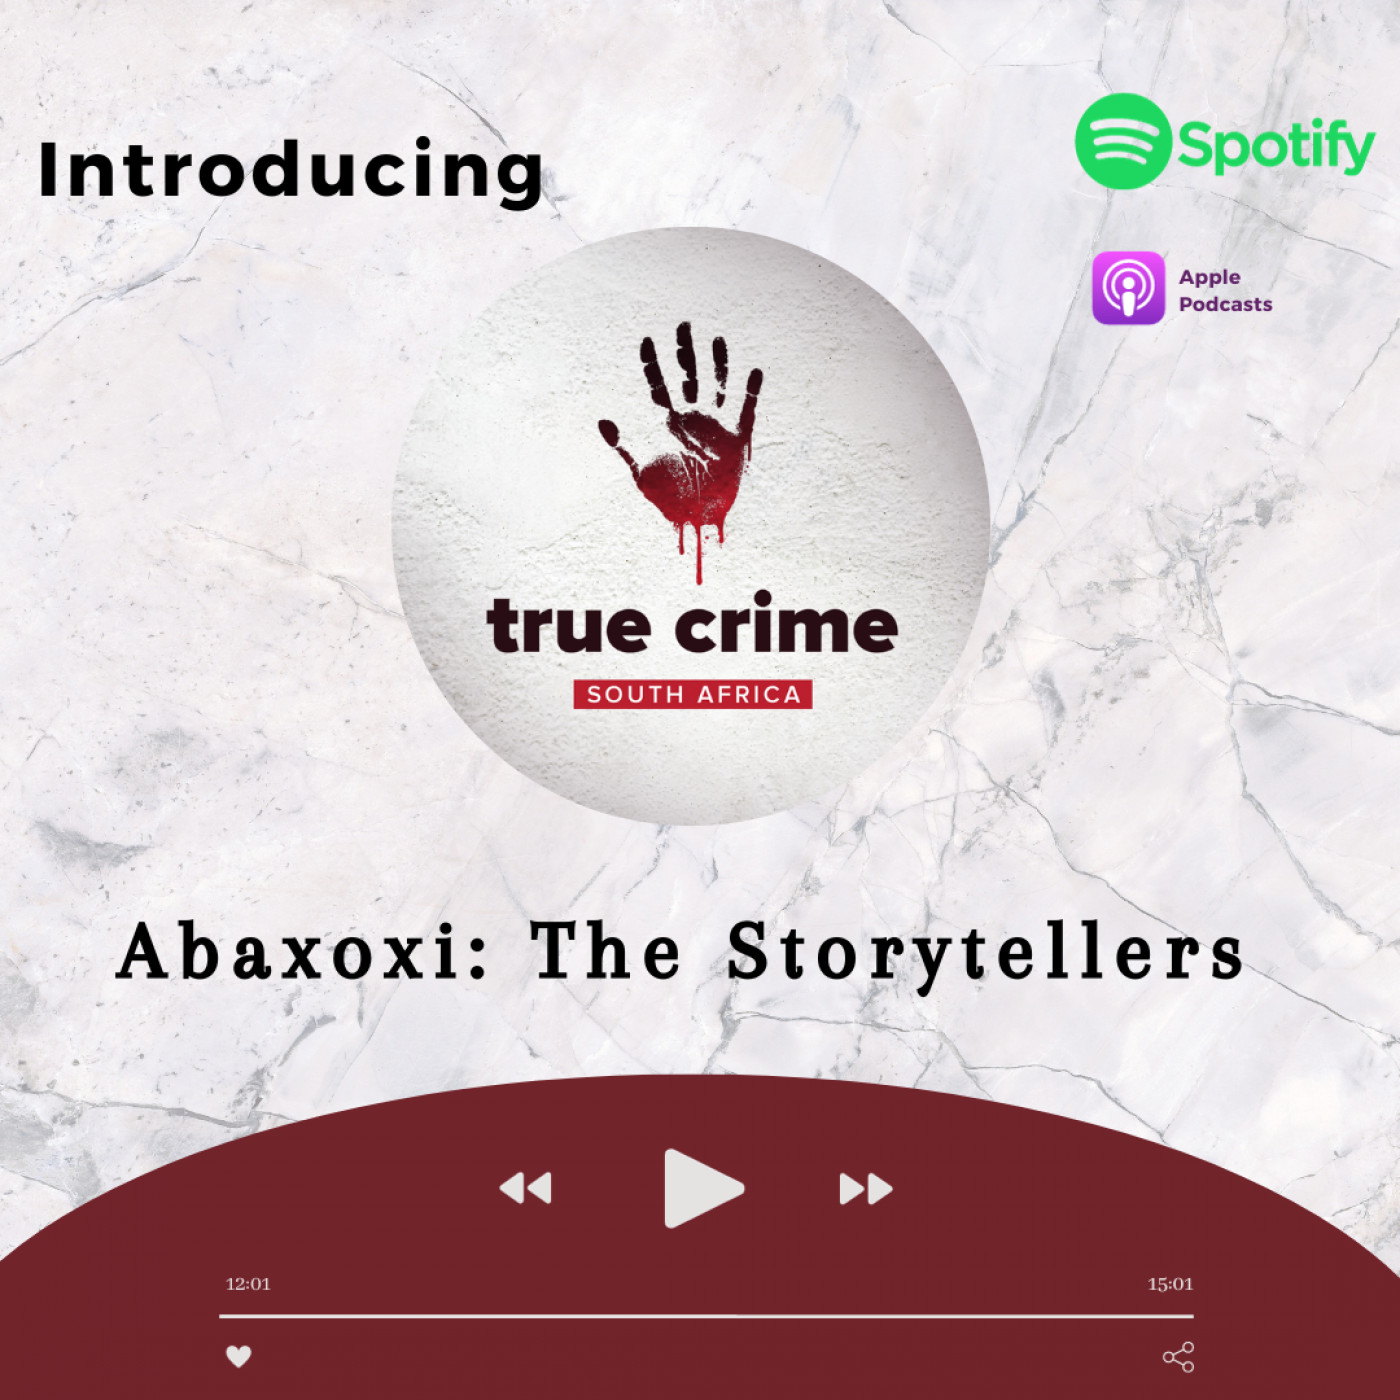 Introducing: Abaxoxi The Storytellers